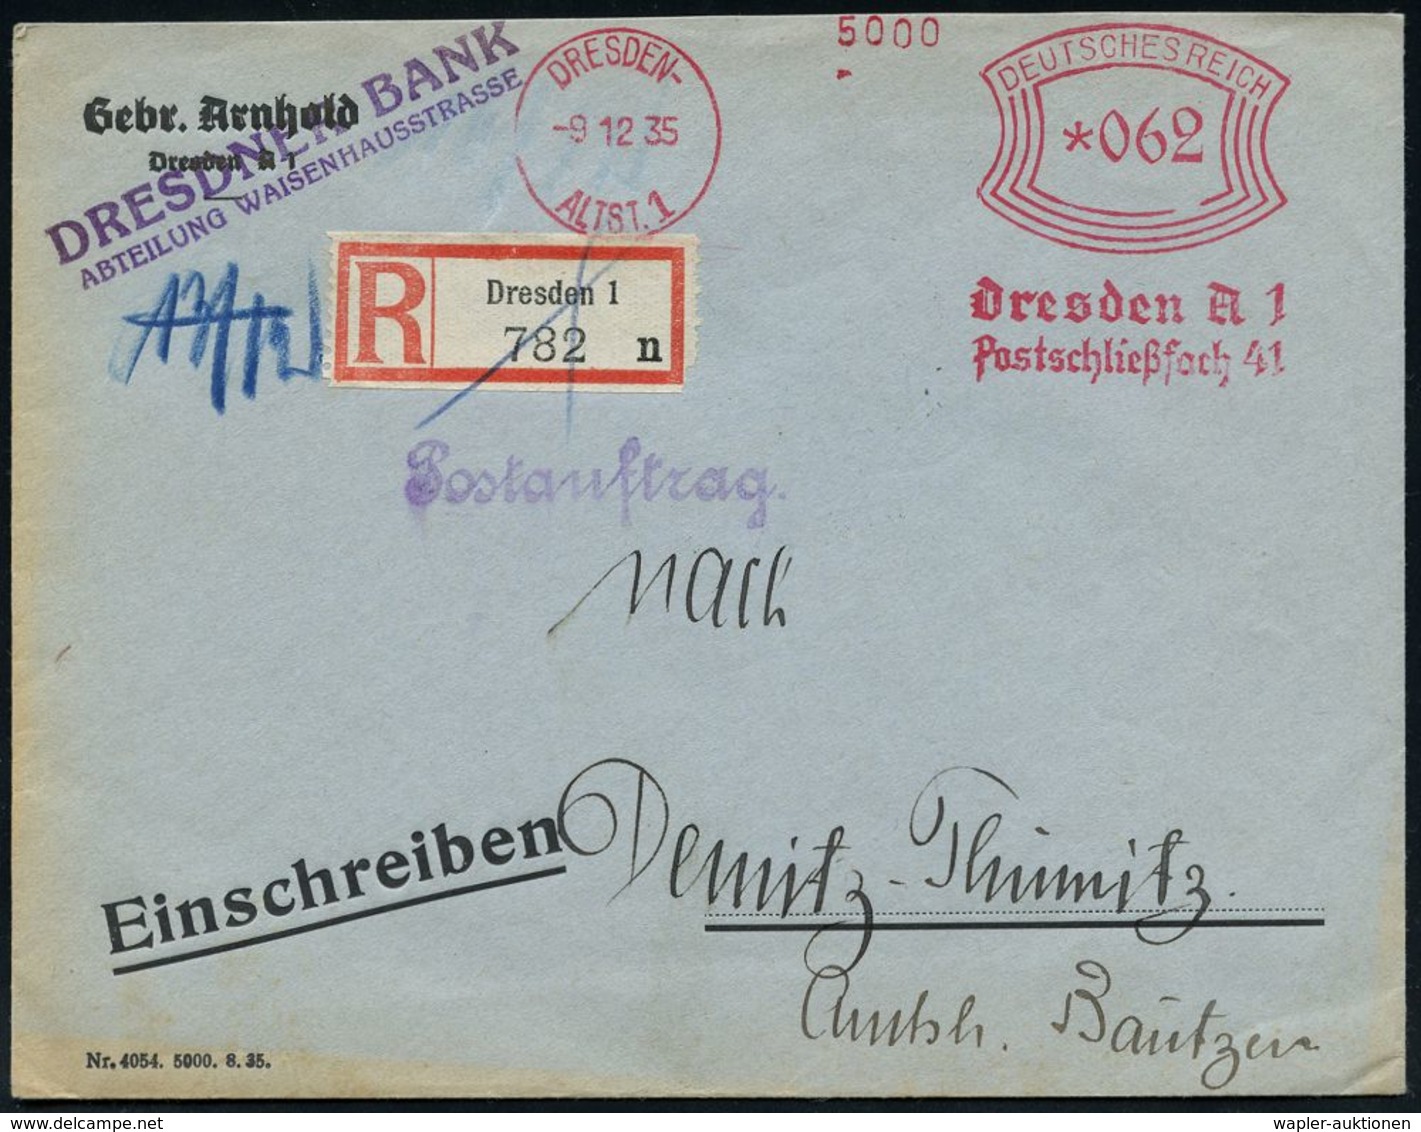 JUDAICA / JÜDISCHE GESCHICHTE / ZIONISMUS : DRESDEN-/ ALTST.1/ Dresden A 1/ Postschließfach 41 1935 (9.12.) Seltener, An - Judaisme